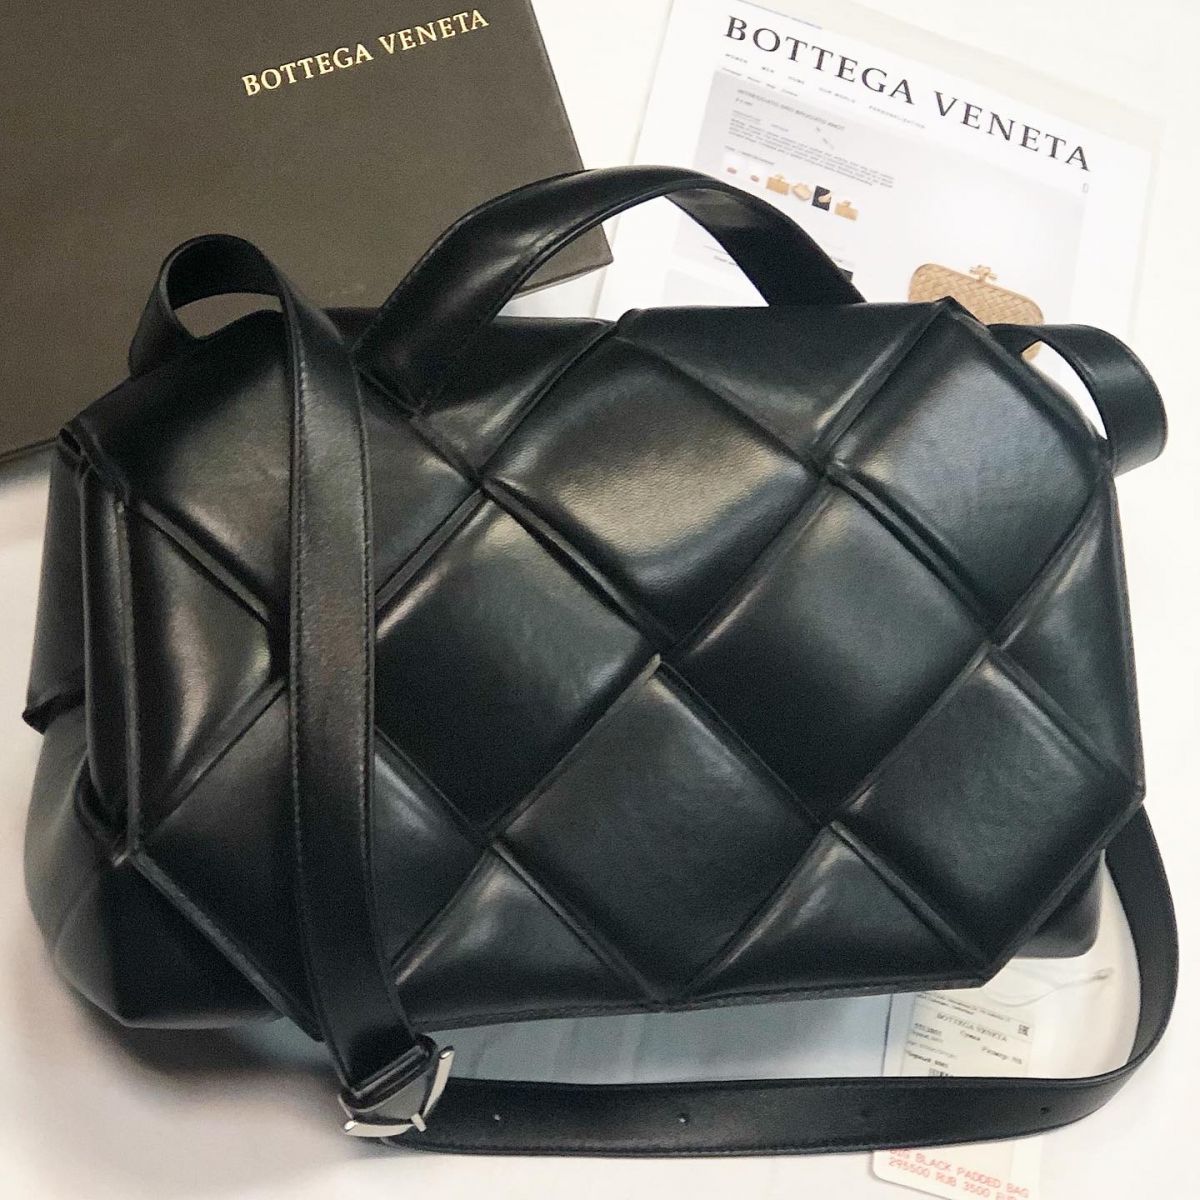 Сумка Bottega Veneta  размер 33/22 цена 153 847 руб / с ценником / 